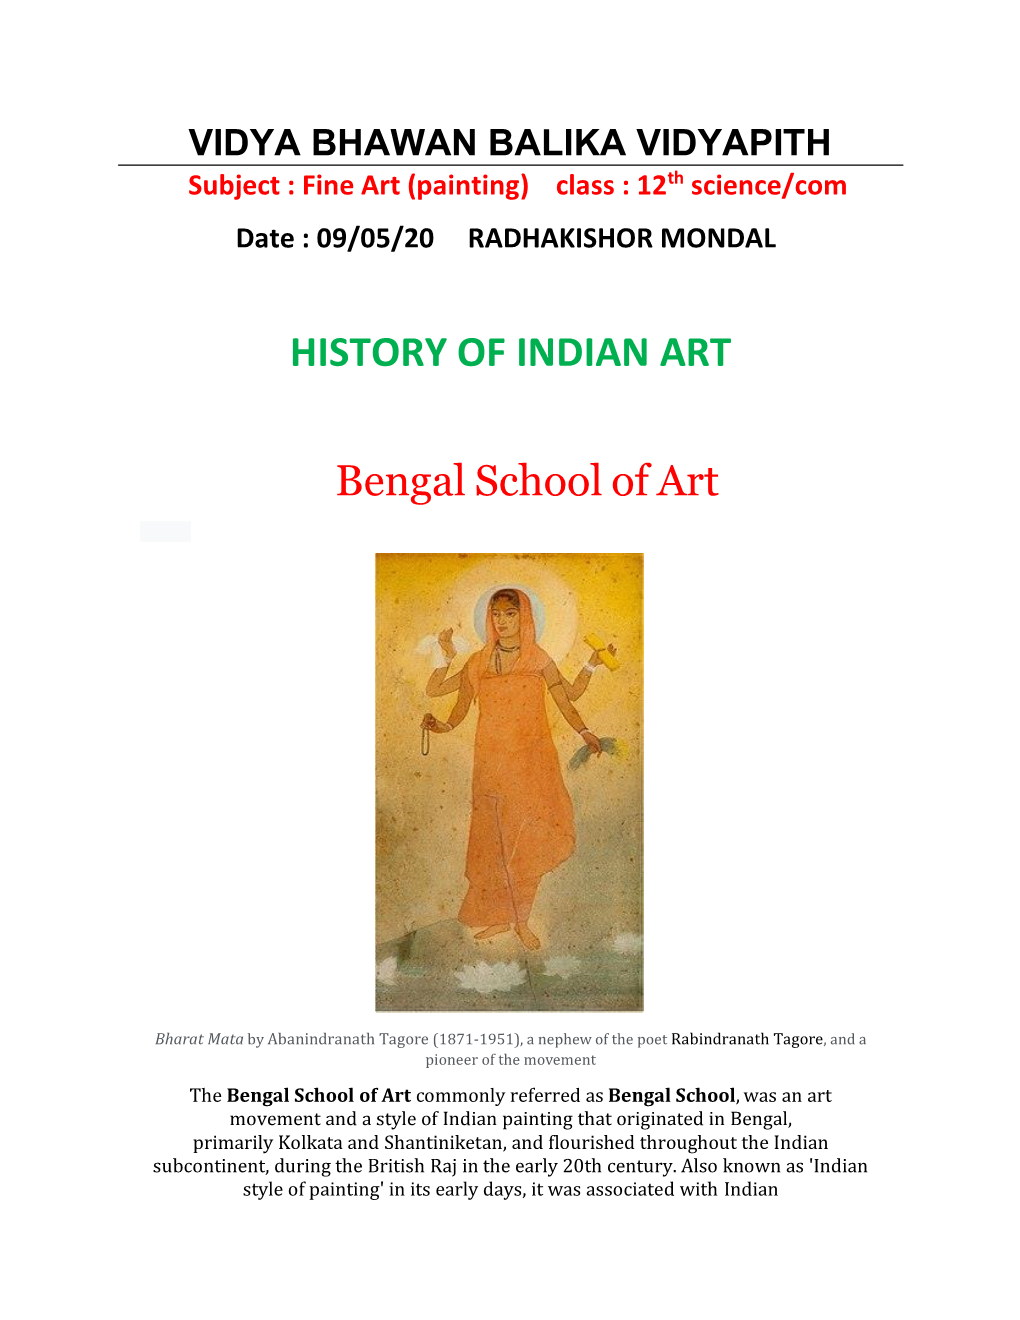 HISTORY of INDIAN ART Bengal School Of